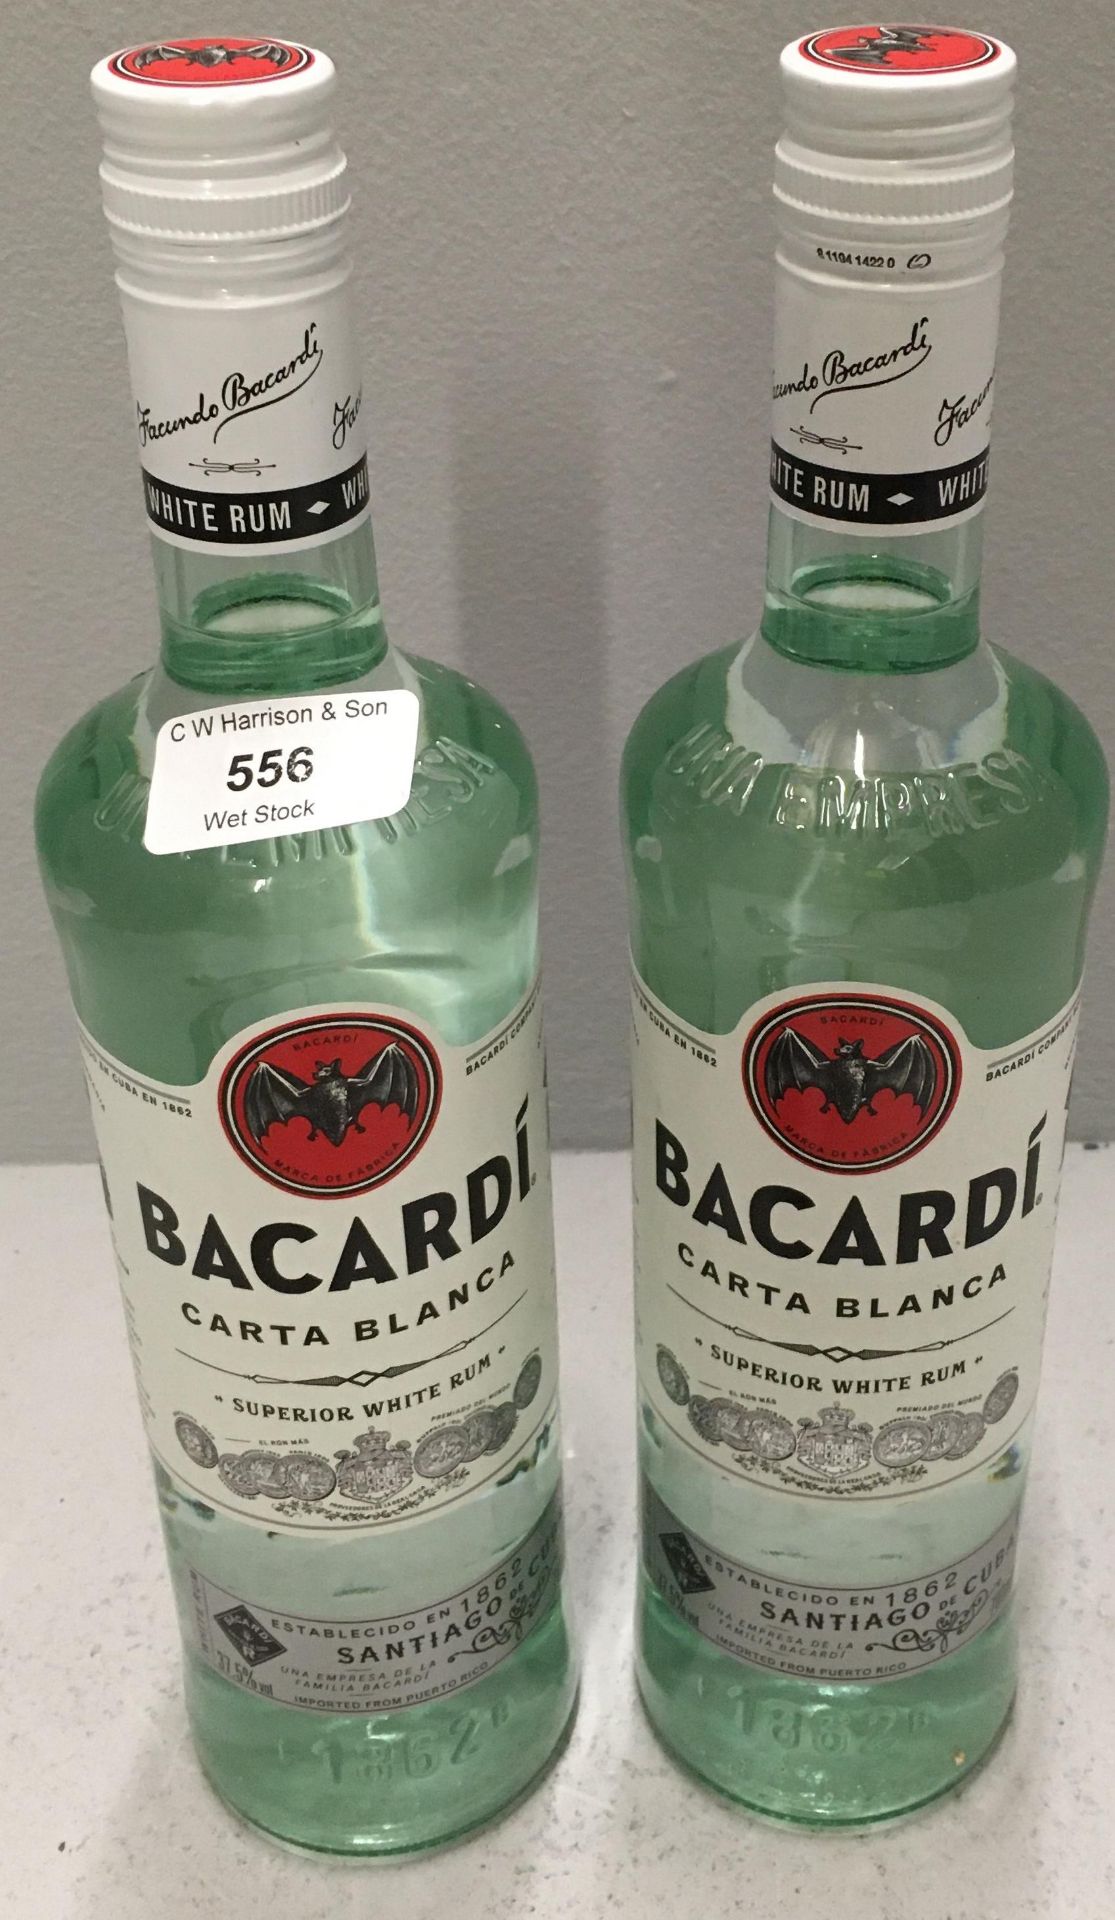 2 x 700ml bottles of Bacardi White Rum